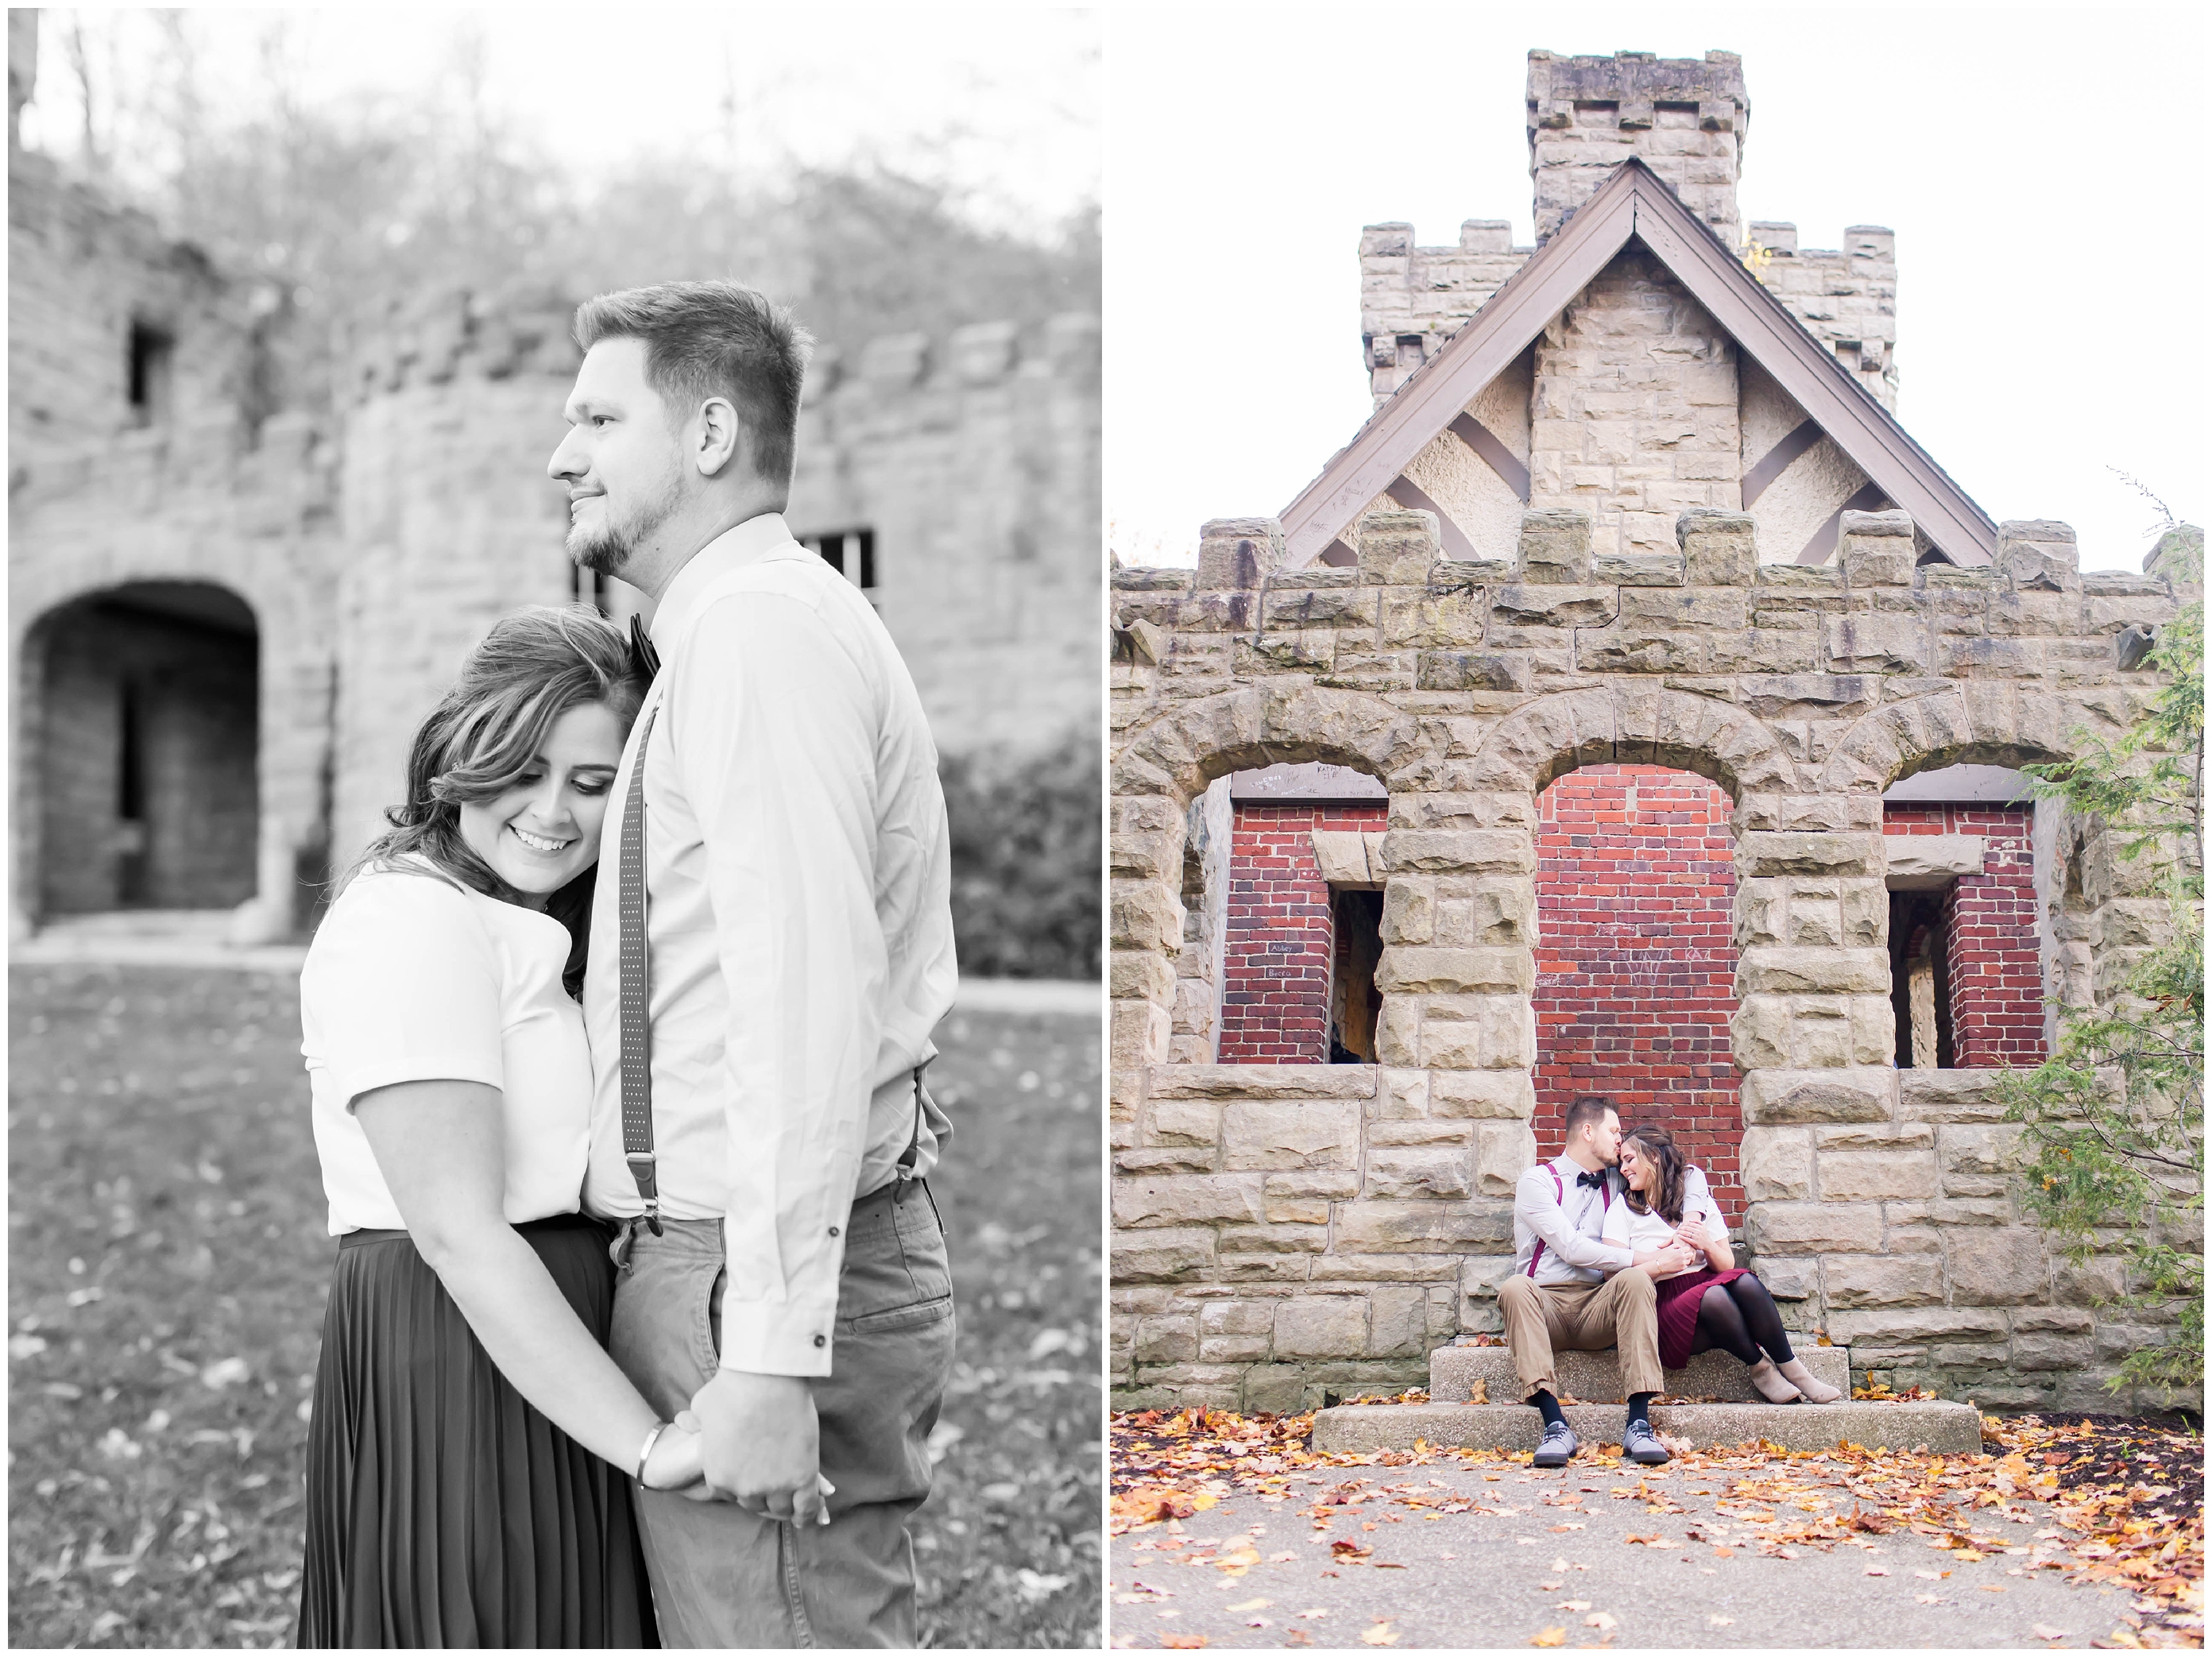 Cleveland Wedding Photographer,Fall Engagement Photos Northeast Ohio,Squire's Castle Engagement Photos,loren jackson photography,photographer akron ohio,